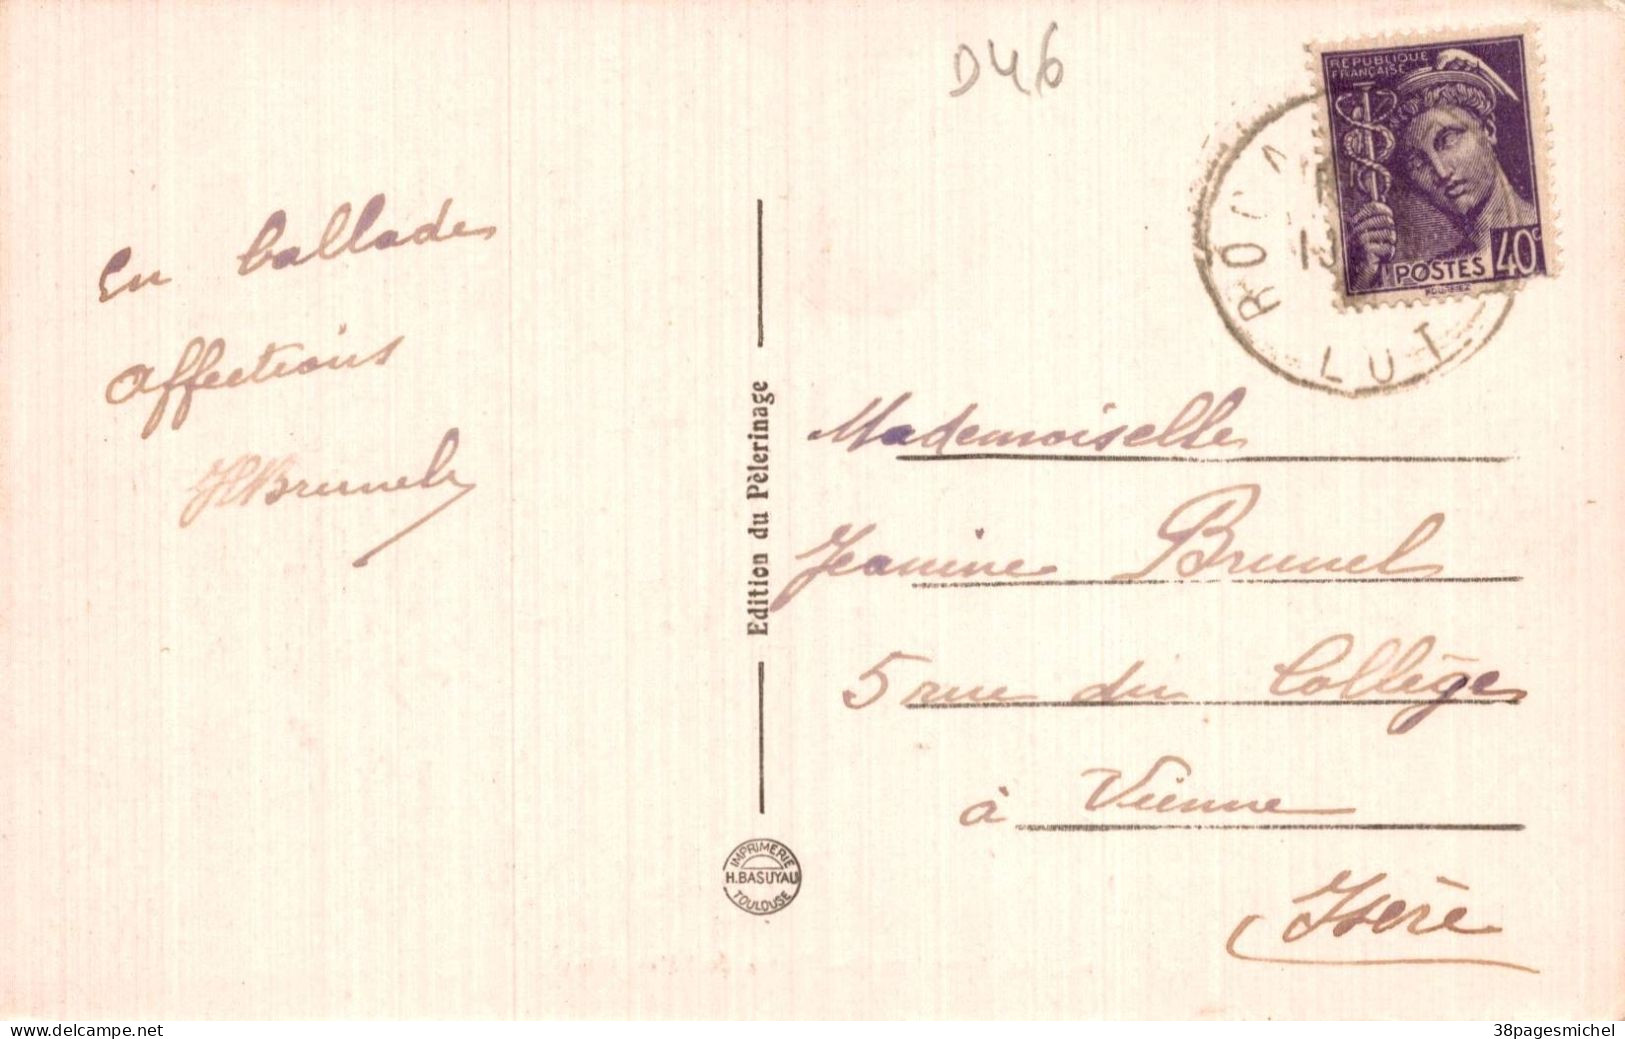 K1905 - ROCAMADOUR - D46 - Lot de 4 Cartes Postales